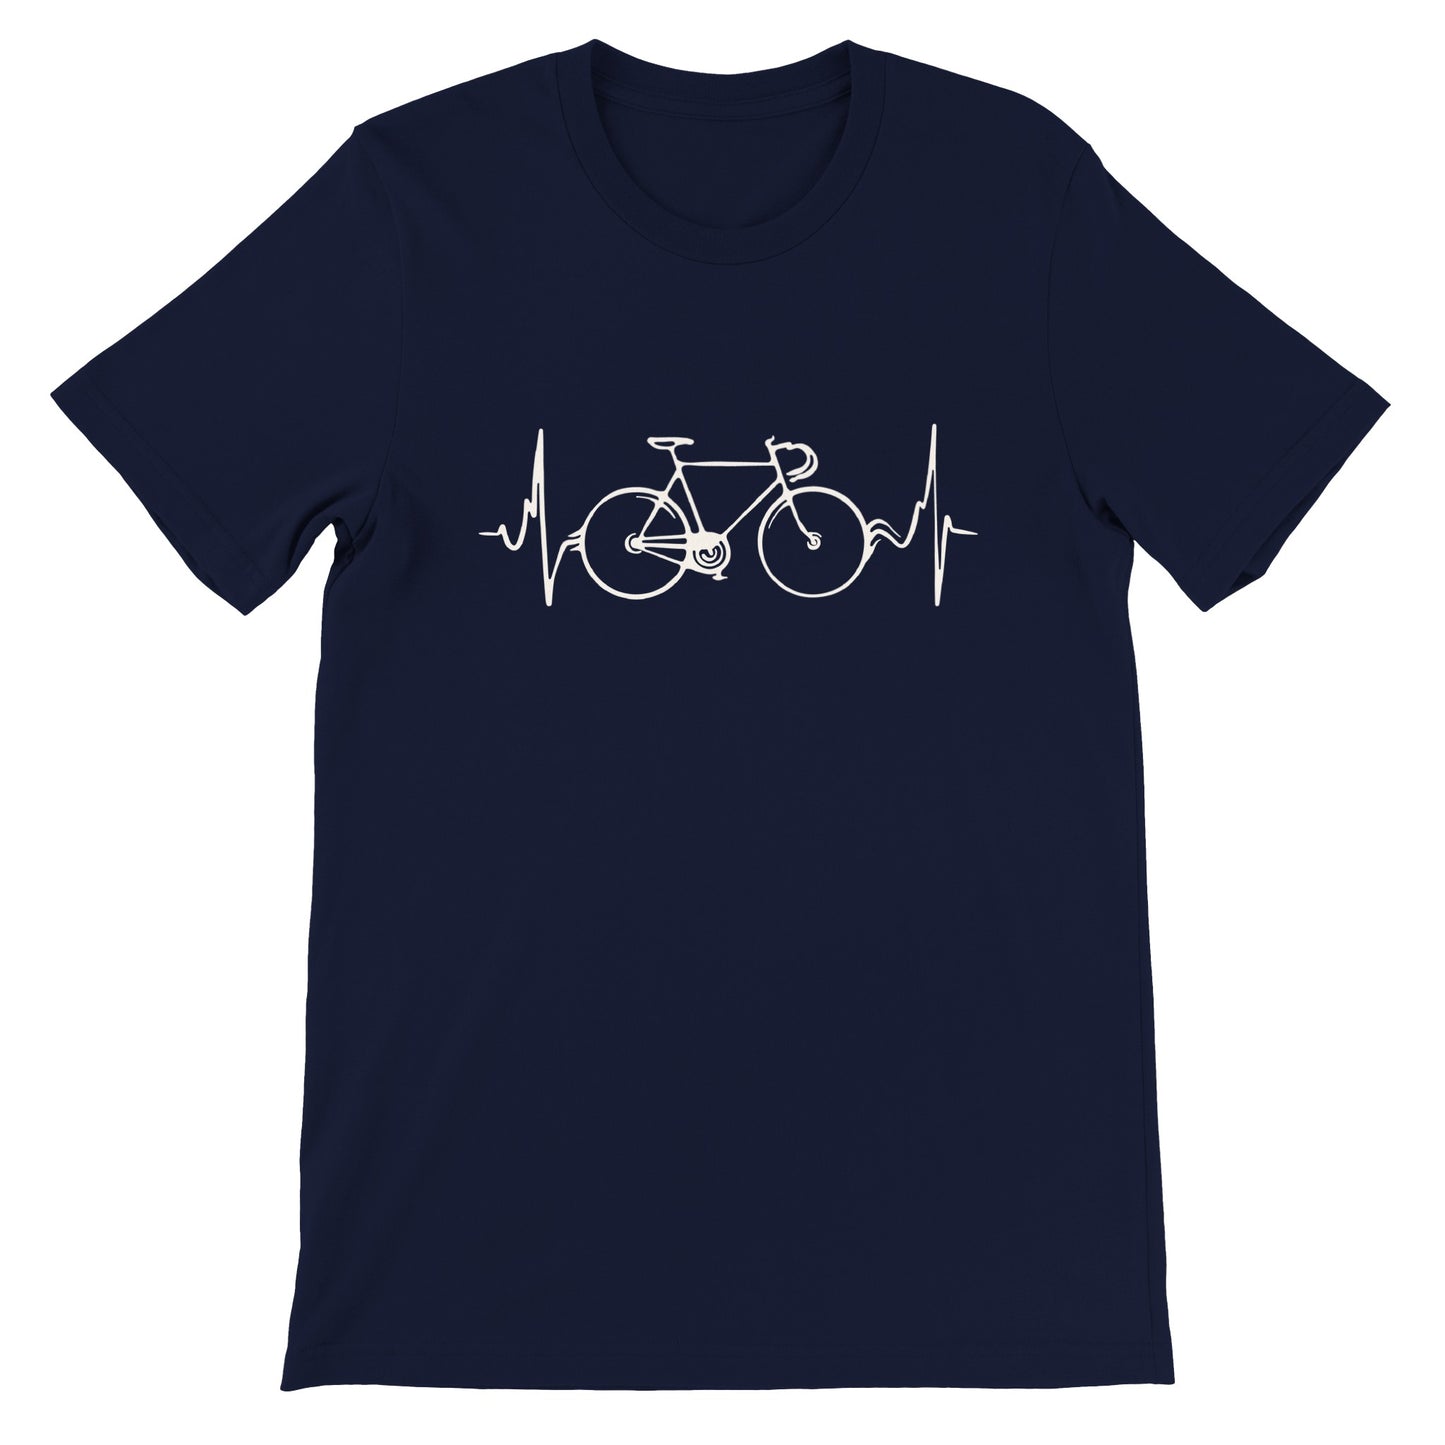 Cycing is Life - Premium Unisex Crewneck T-shirt